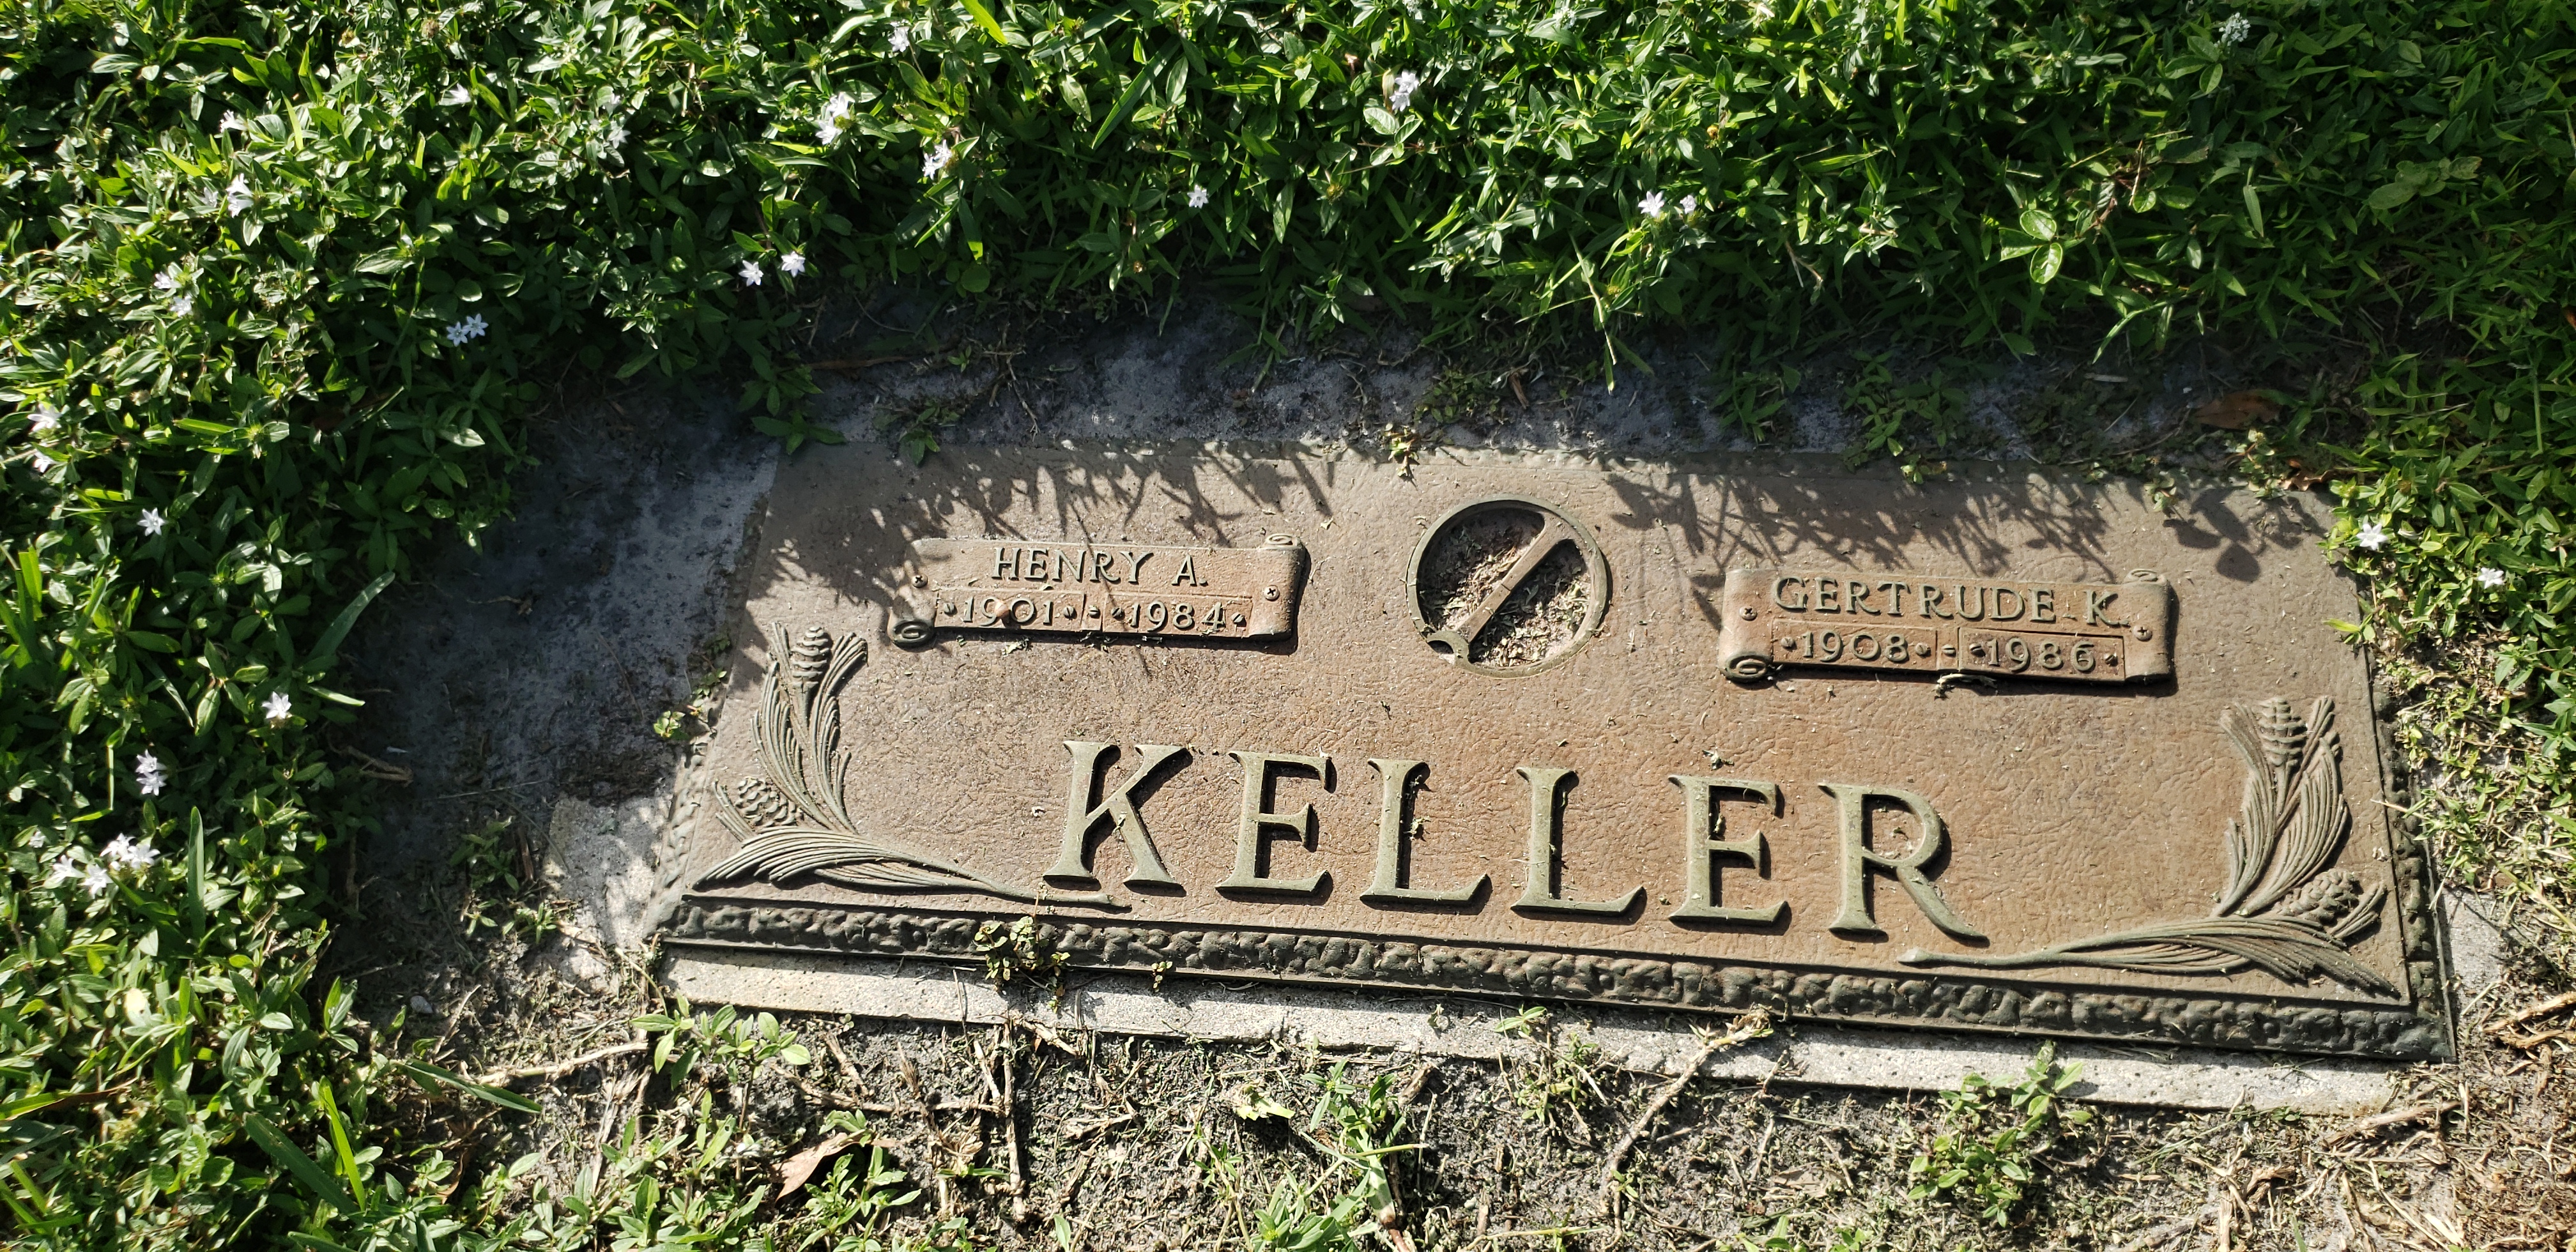 Gertrude K Keller